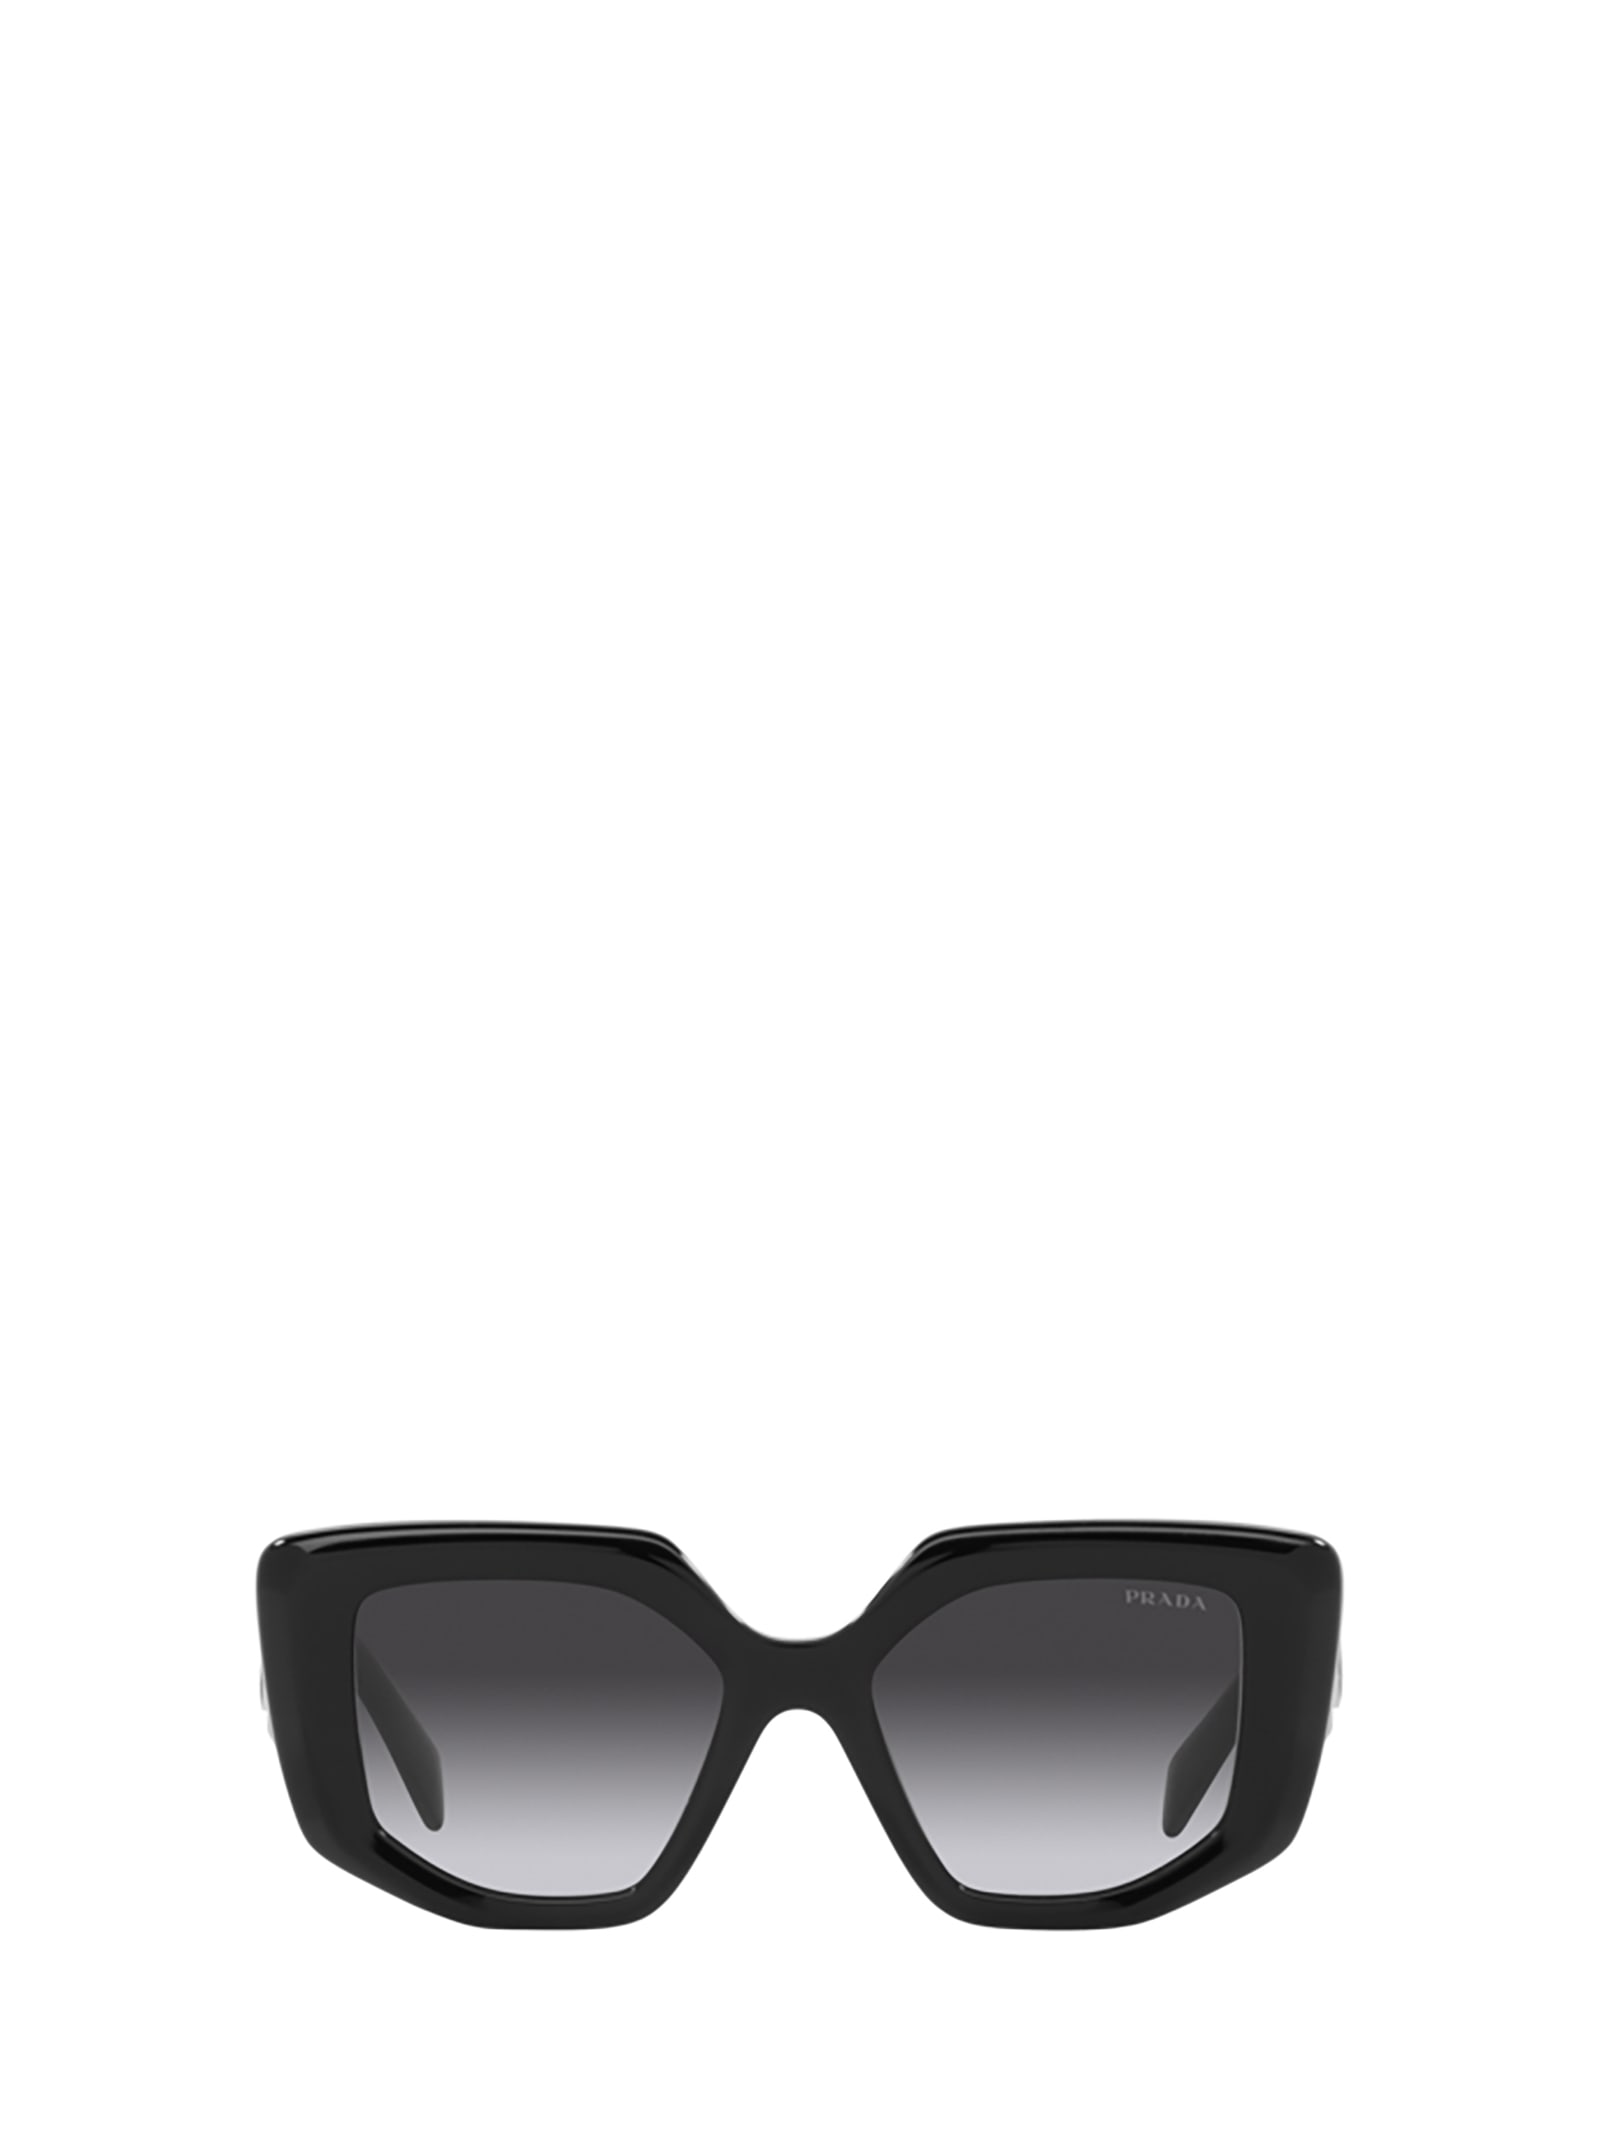 Prada Eyewear Pr 14zs Black Sunglasses